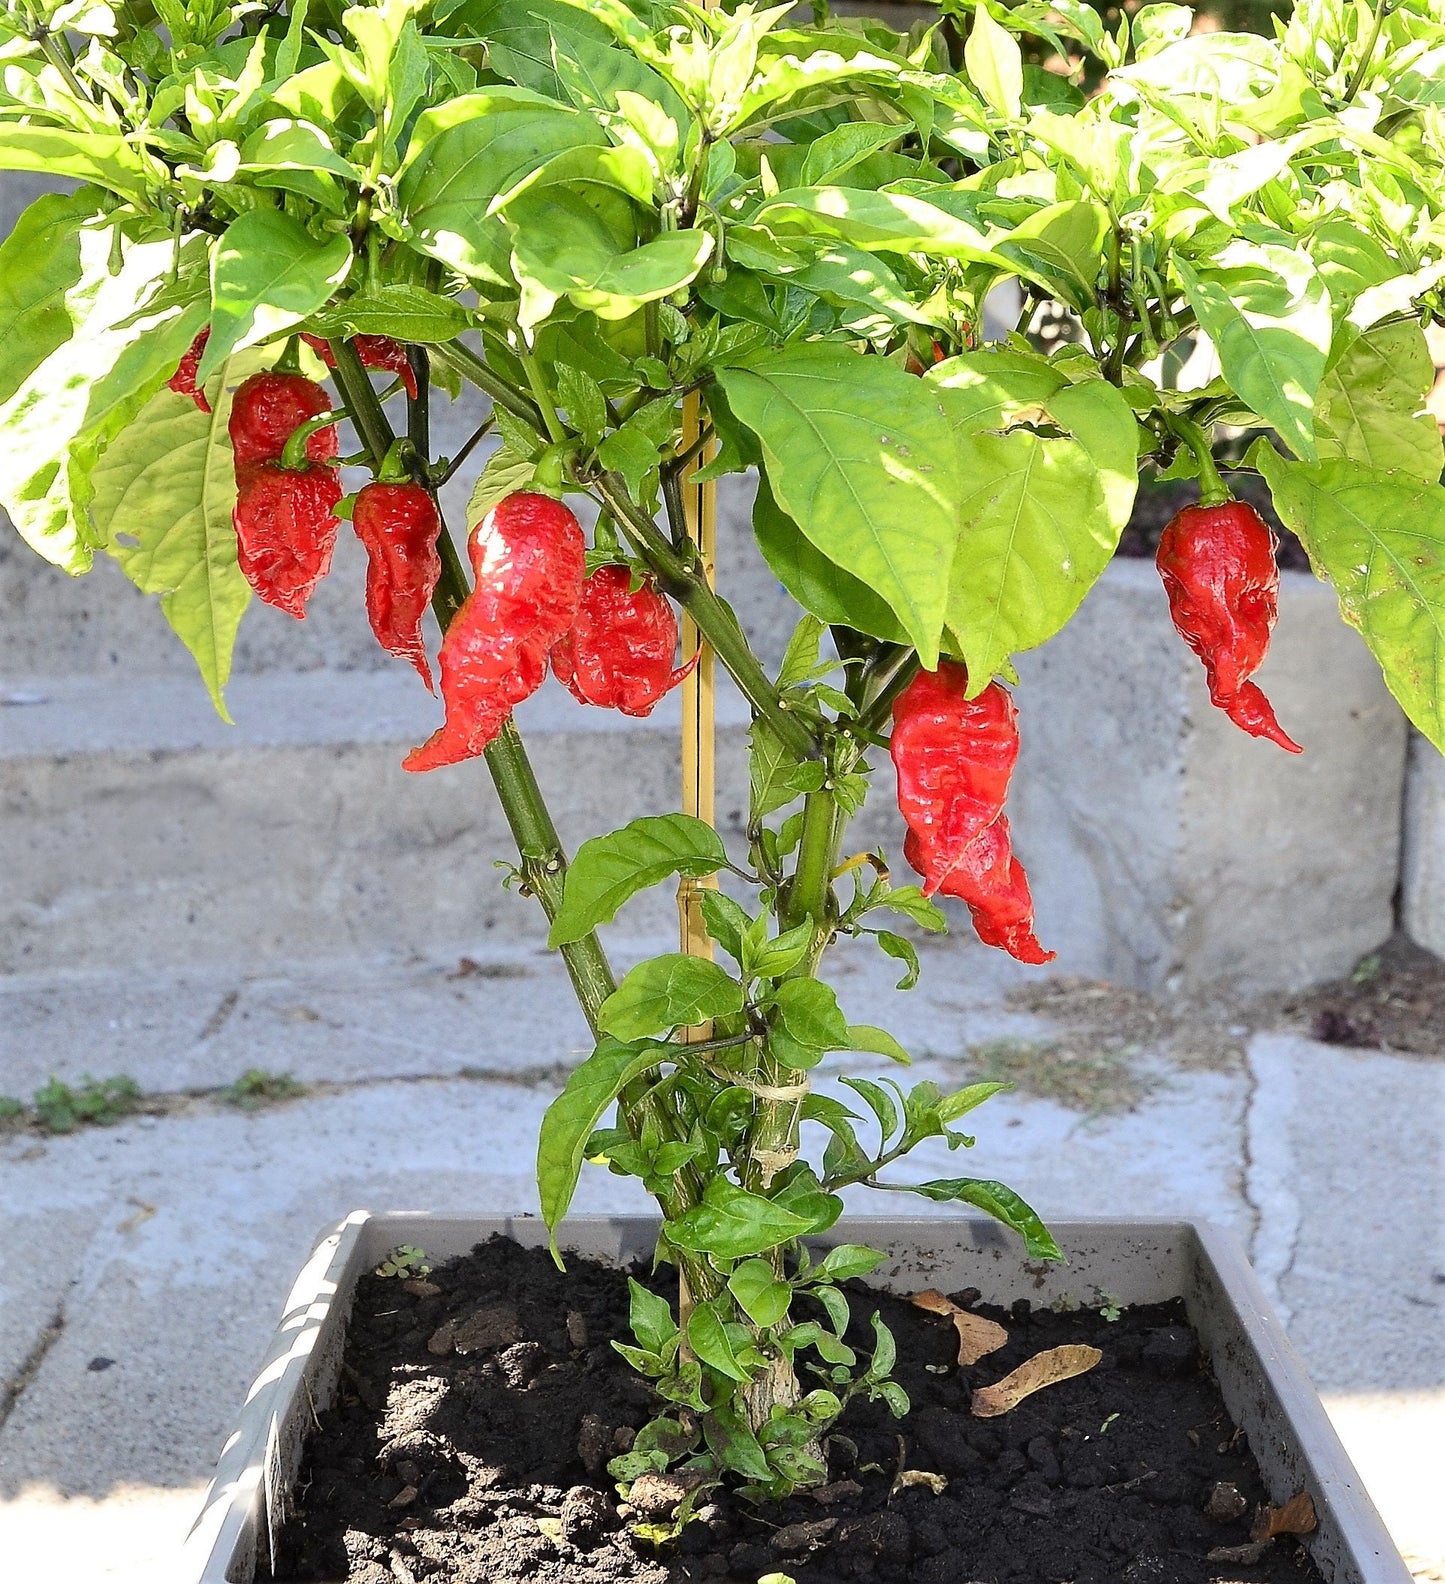 10 Red CAROLINA REAPER PEPPER World's Hottest Capsicum Chinense Hot Chili Vegetable Seeds